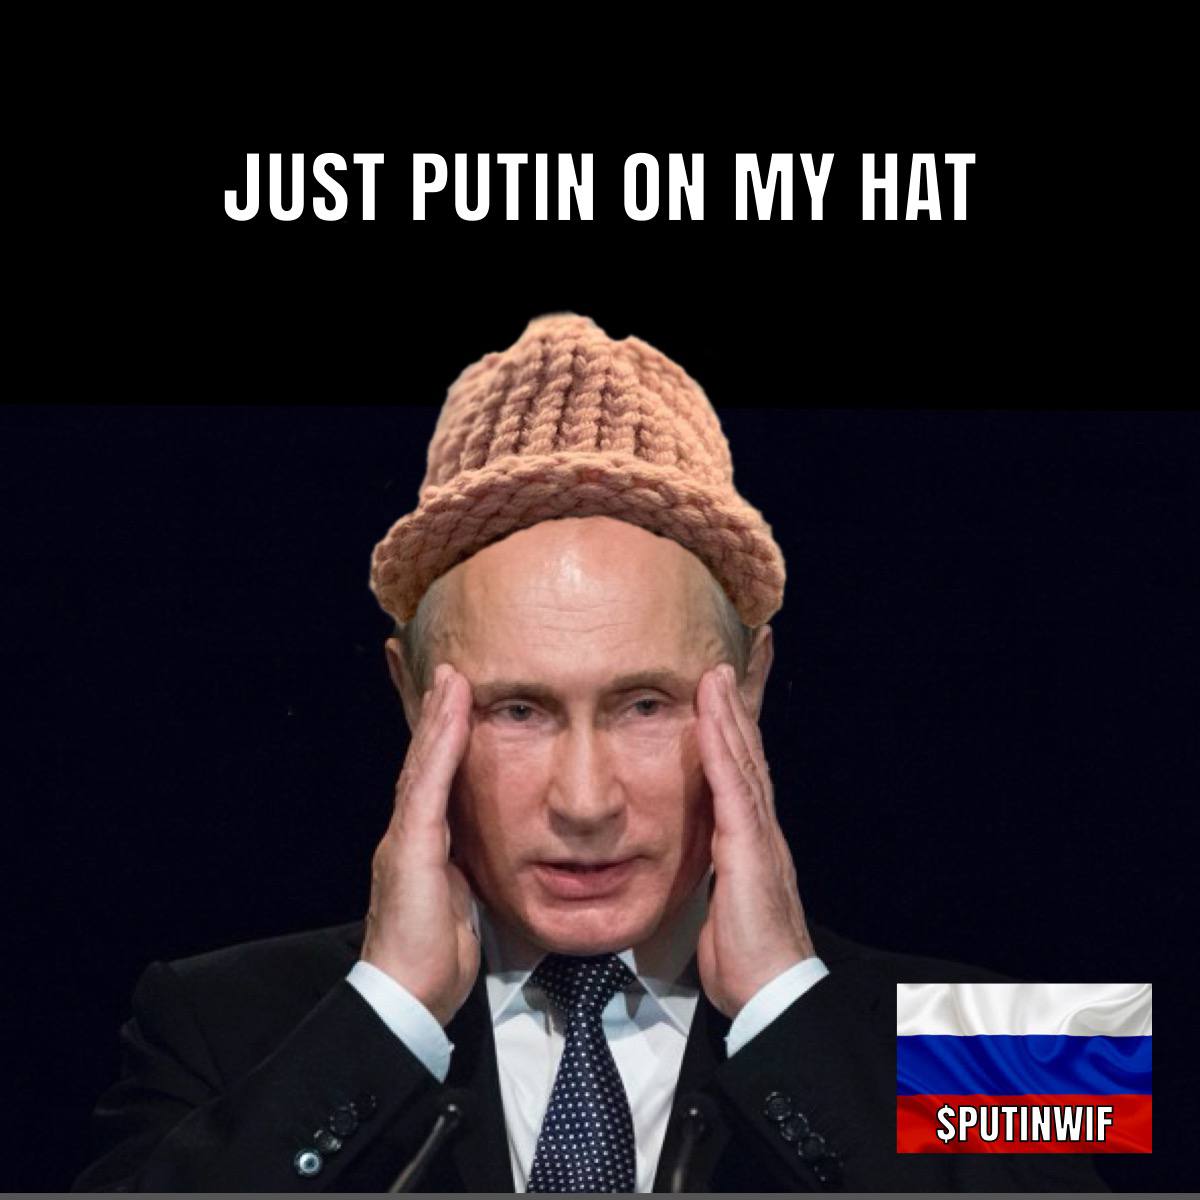 @digitalartchick And this president wif hat meta tho...

#PUTINWIF tripple meta. @PutinWifHat_

Get your bag! #Solanamemecoins @pumpdotfun